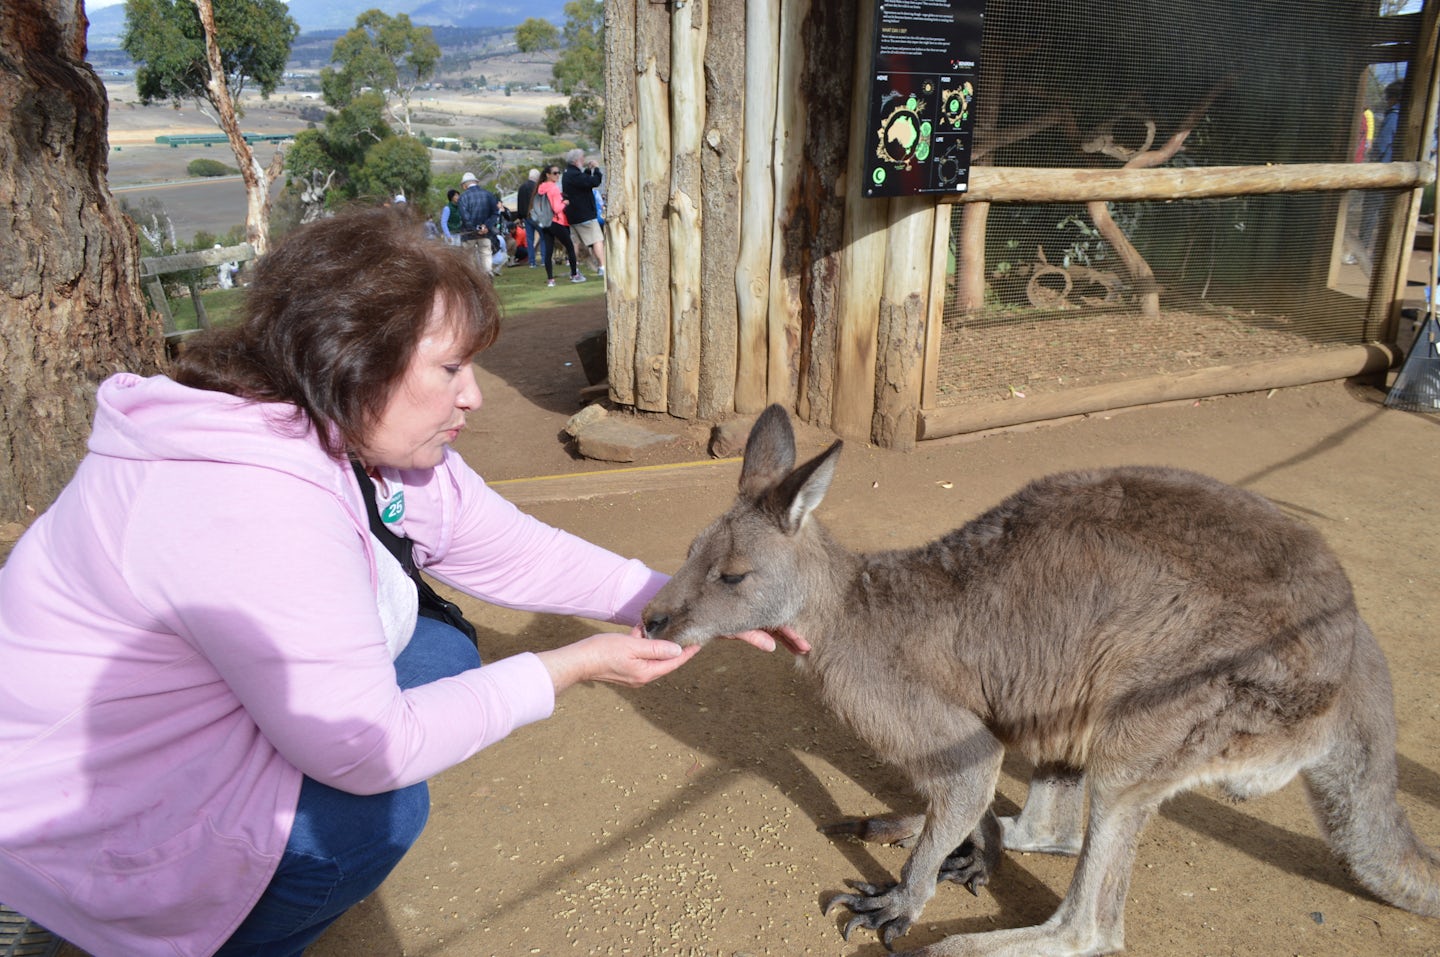 Feeding the kangaroos